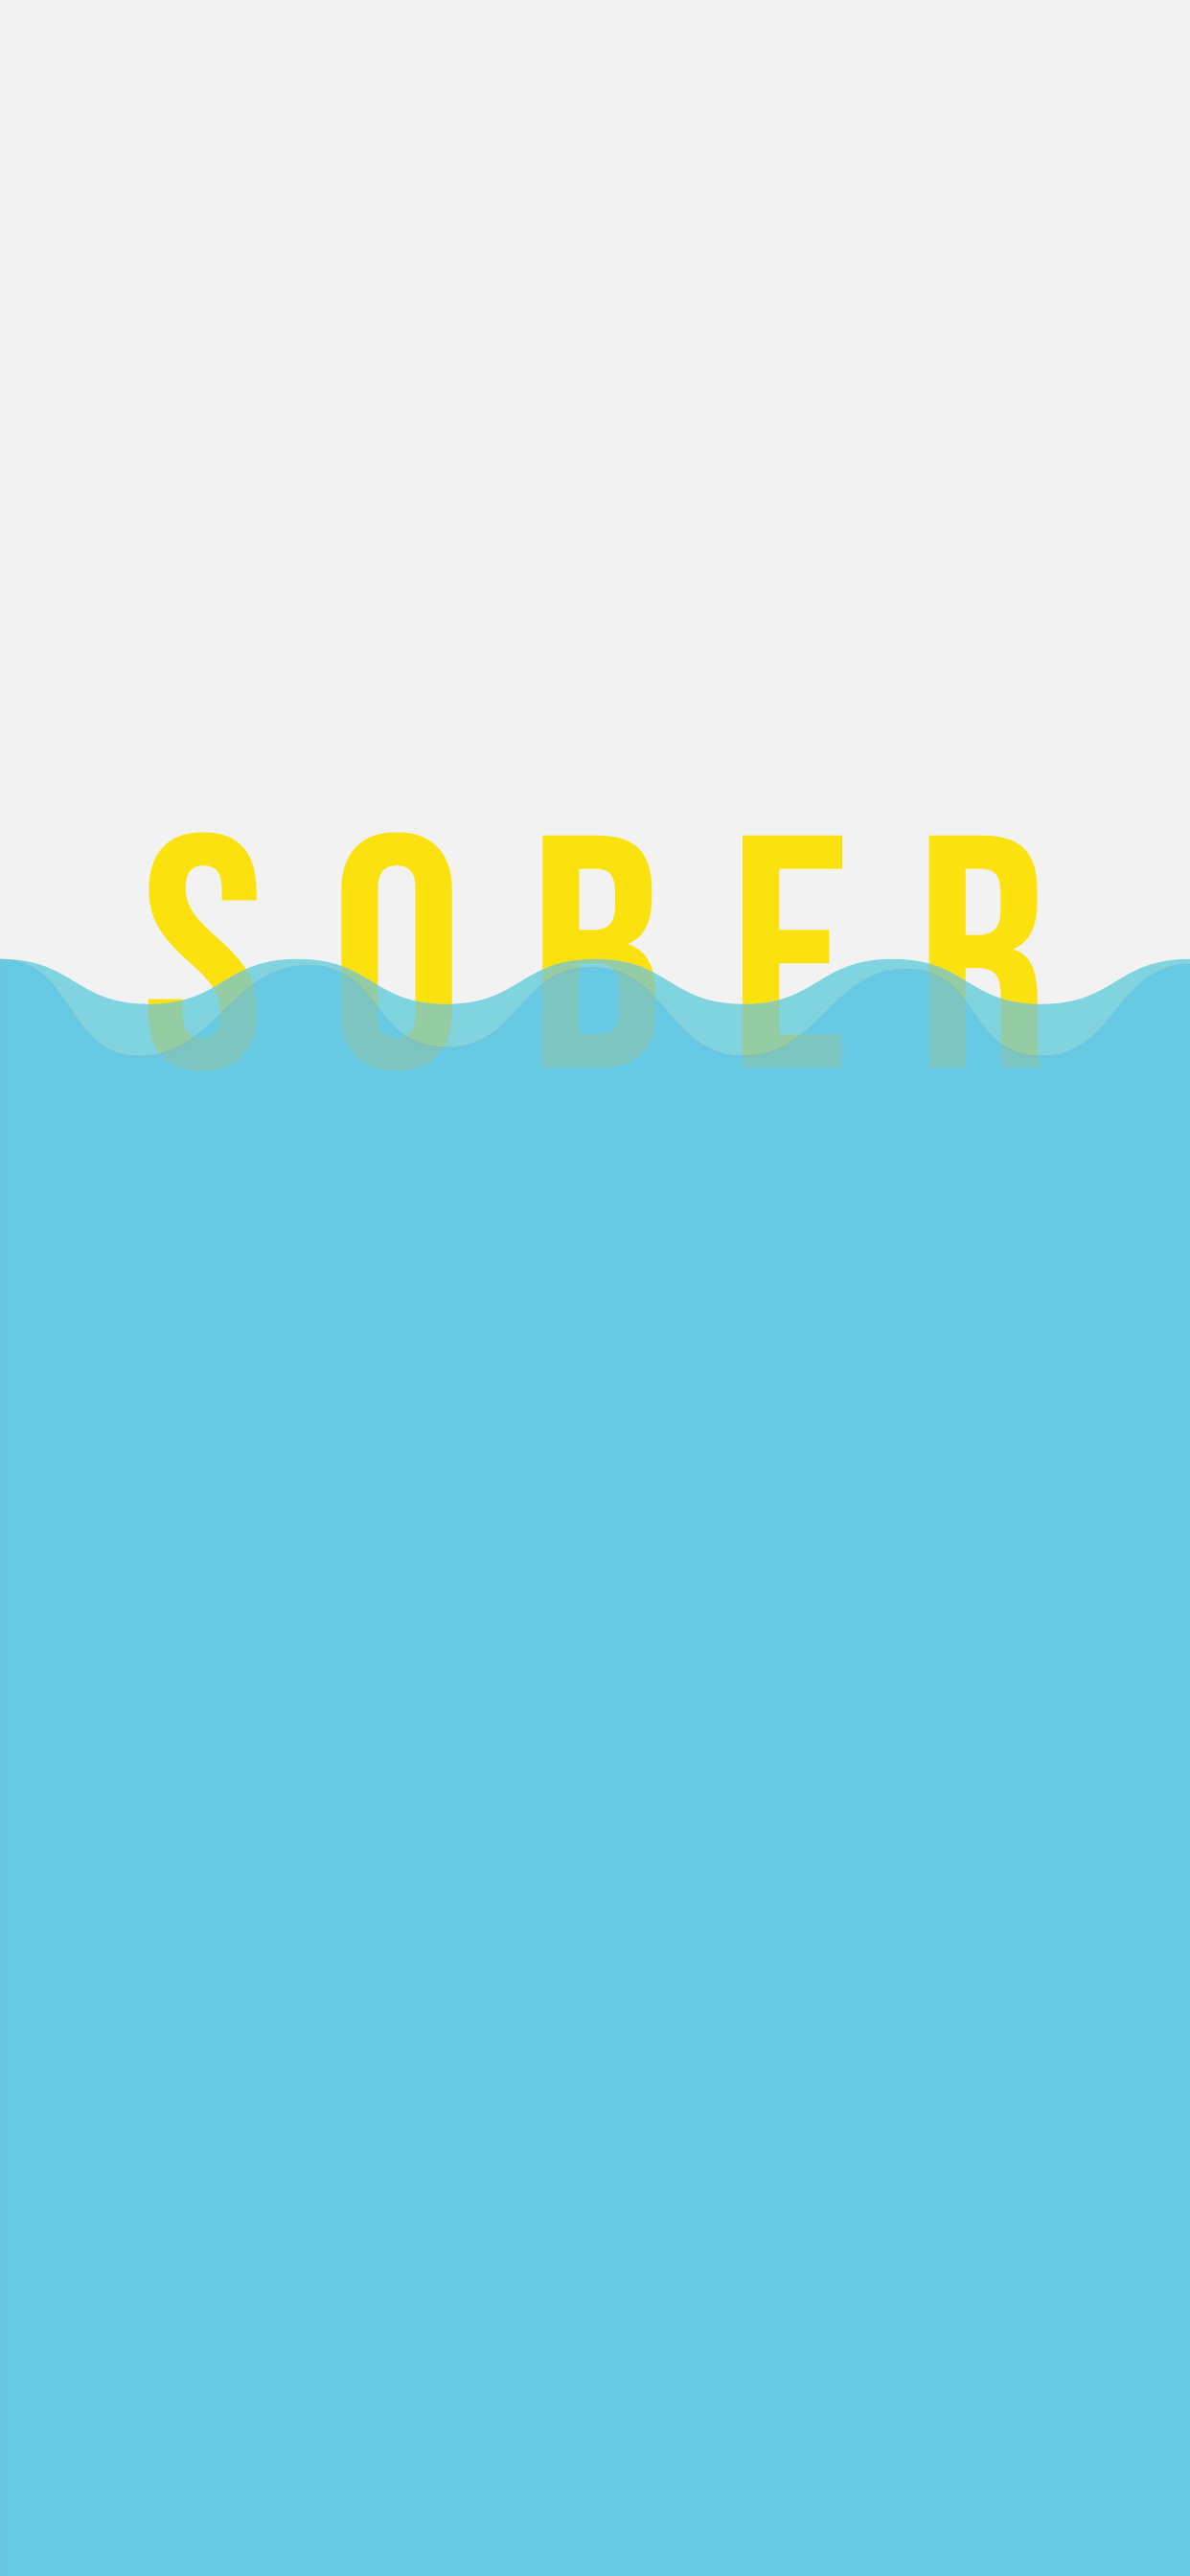 sober XS Max Wallpaper. Sober, Vimeo logo, Wallpaper